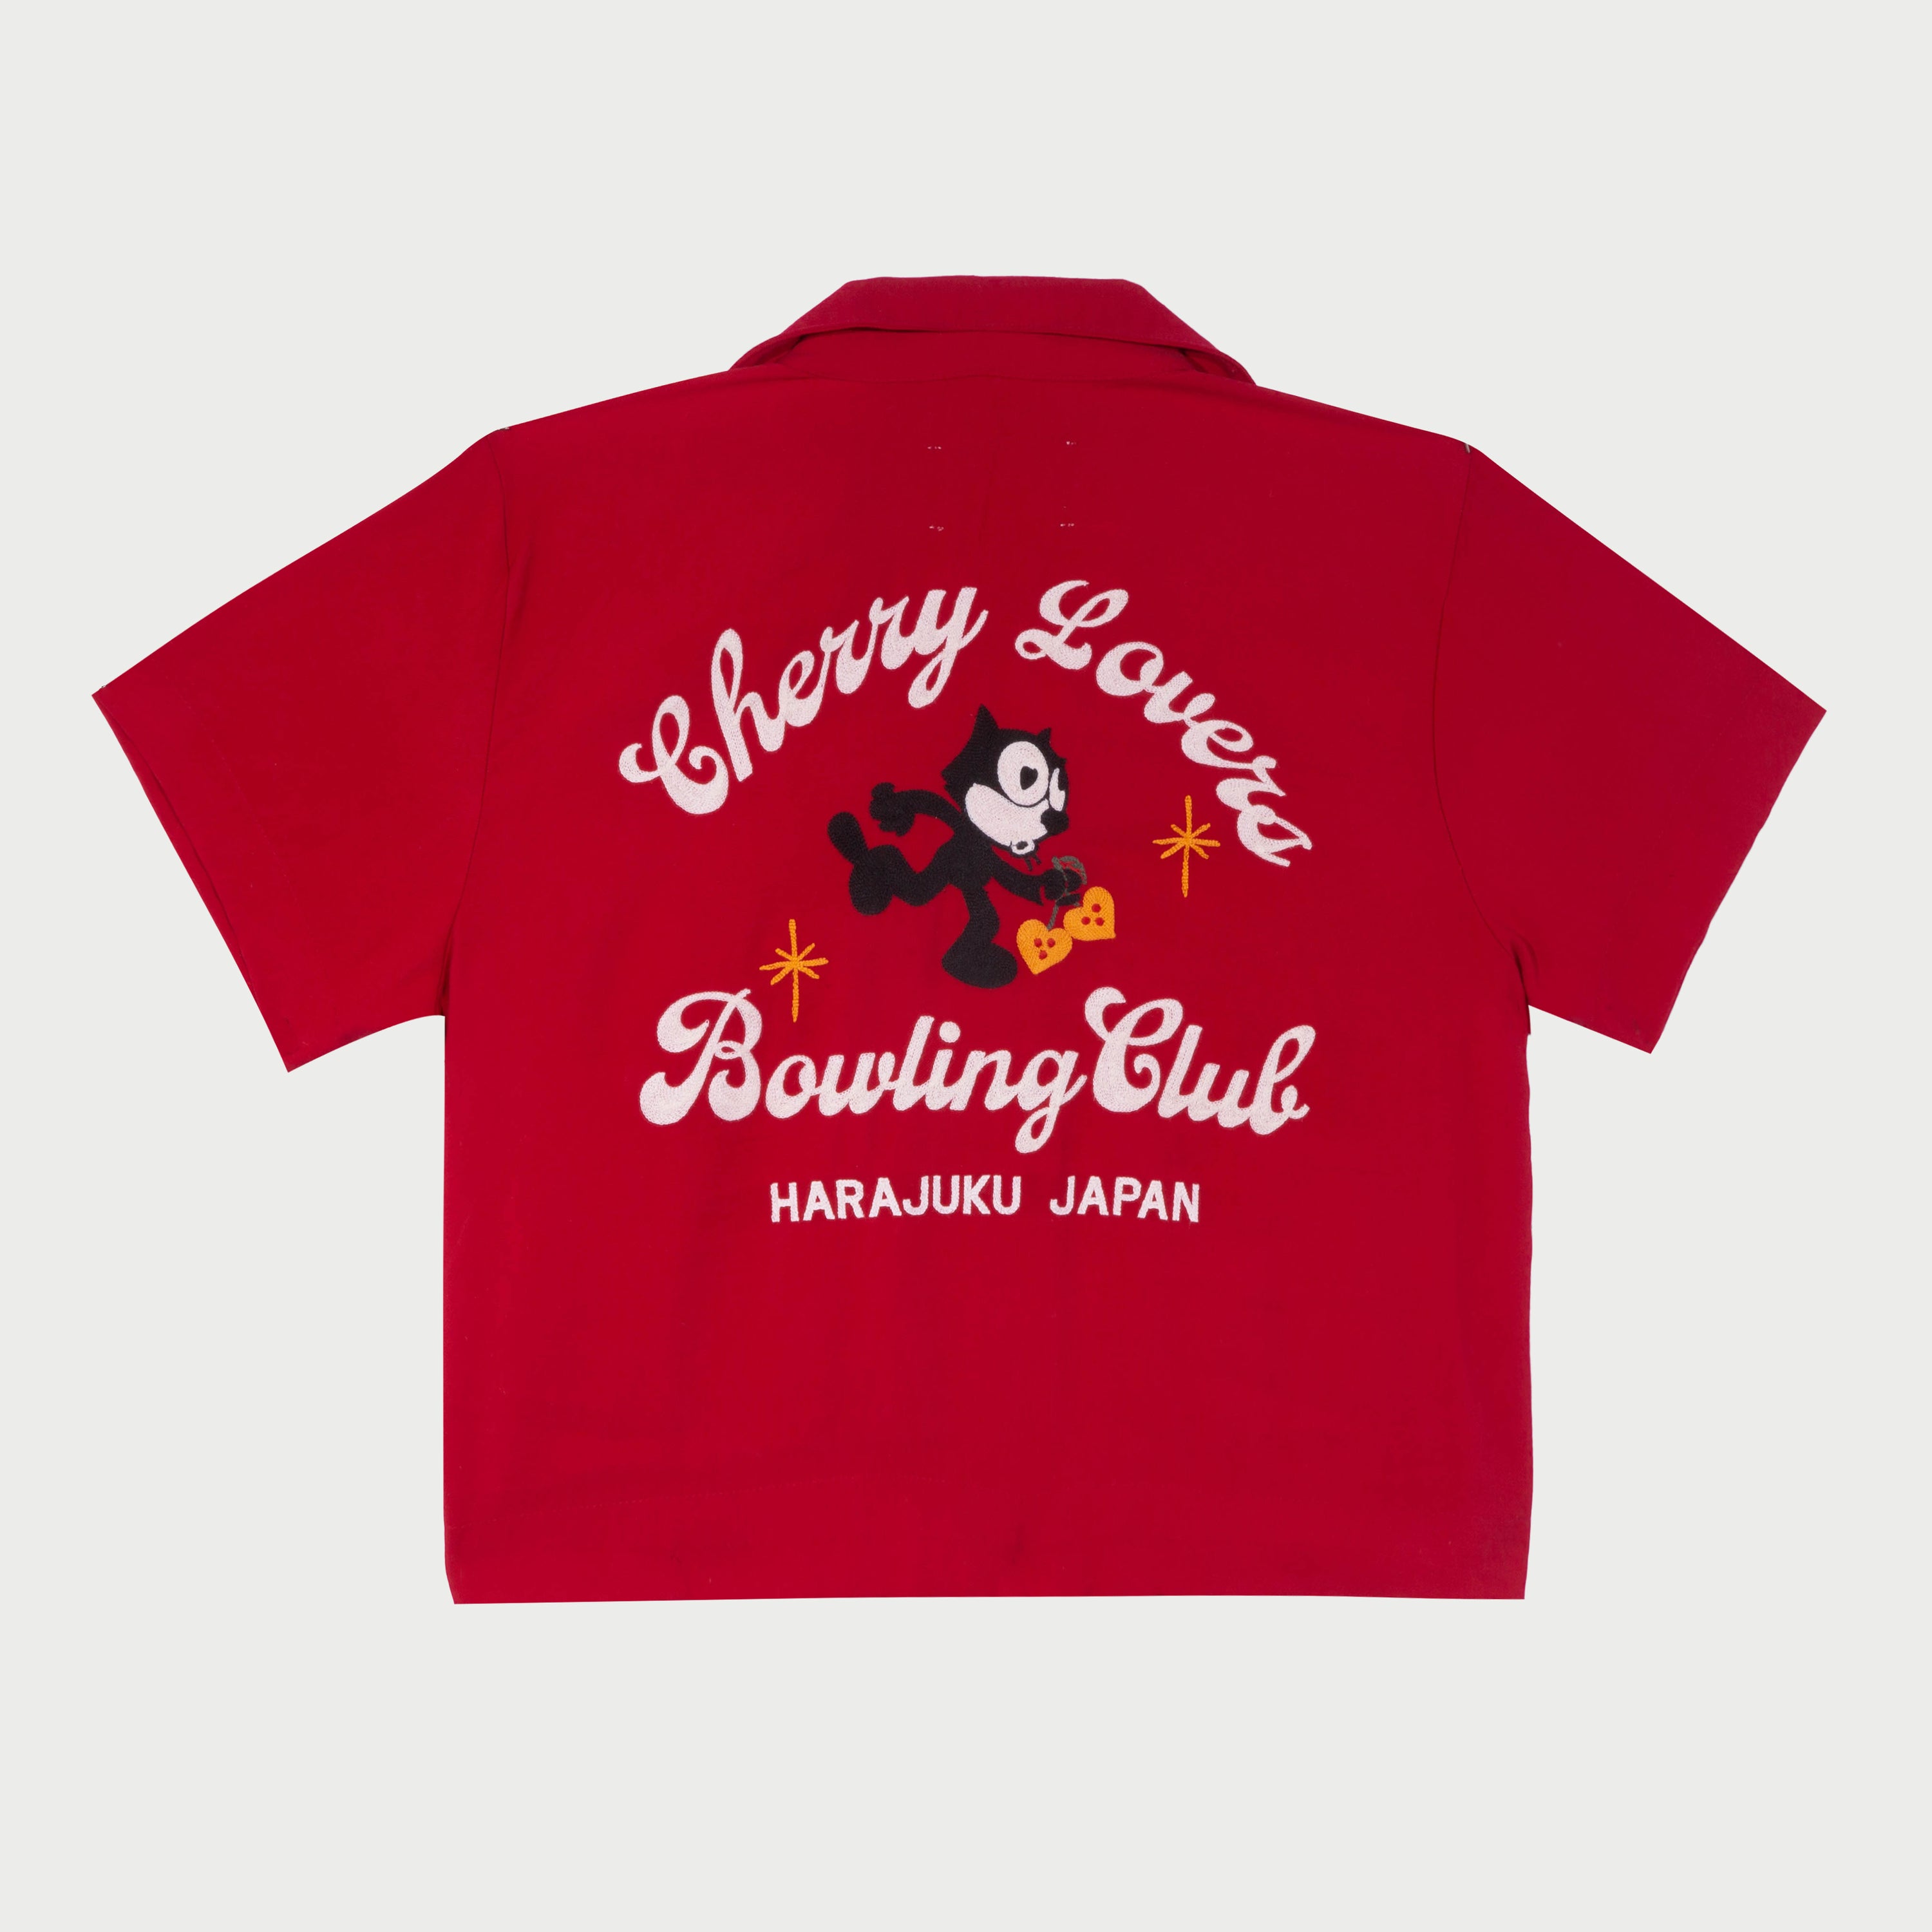 Cherry Lovers Women's Bowling Shirt (Cardinal)